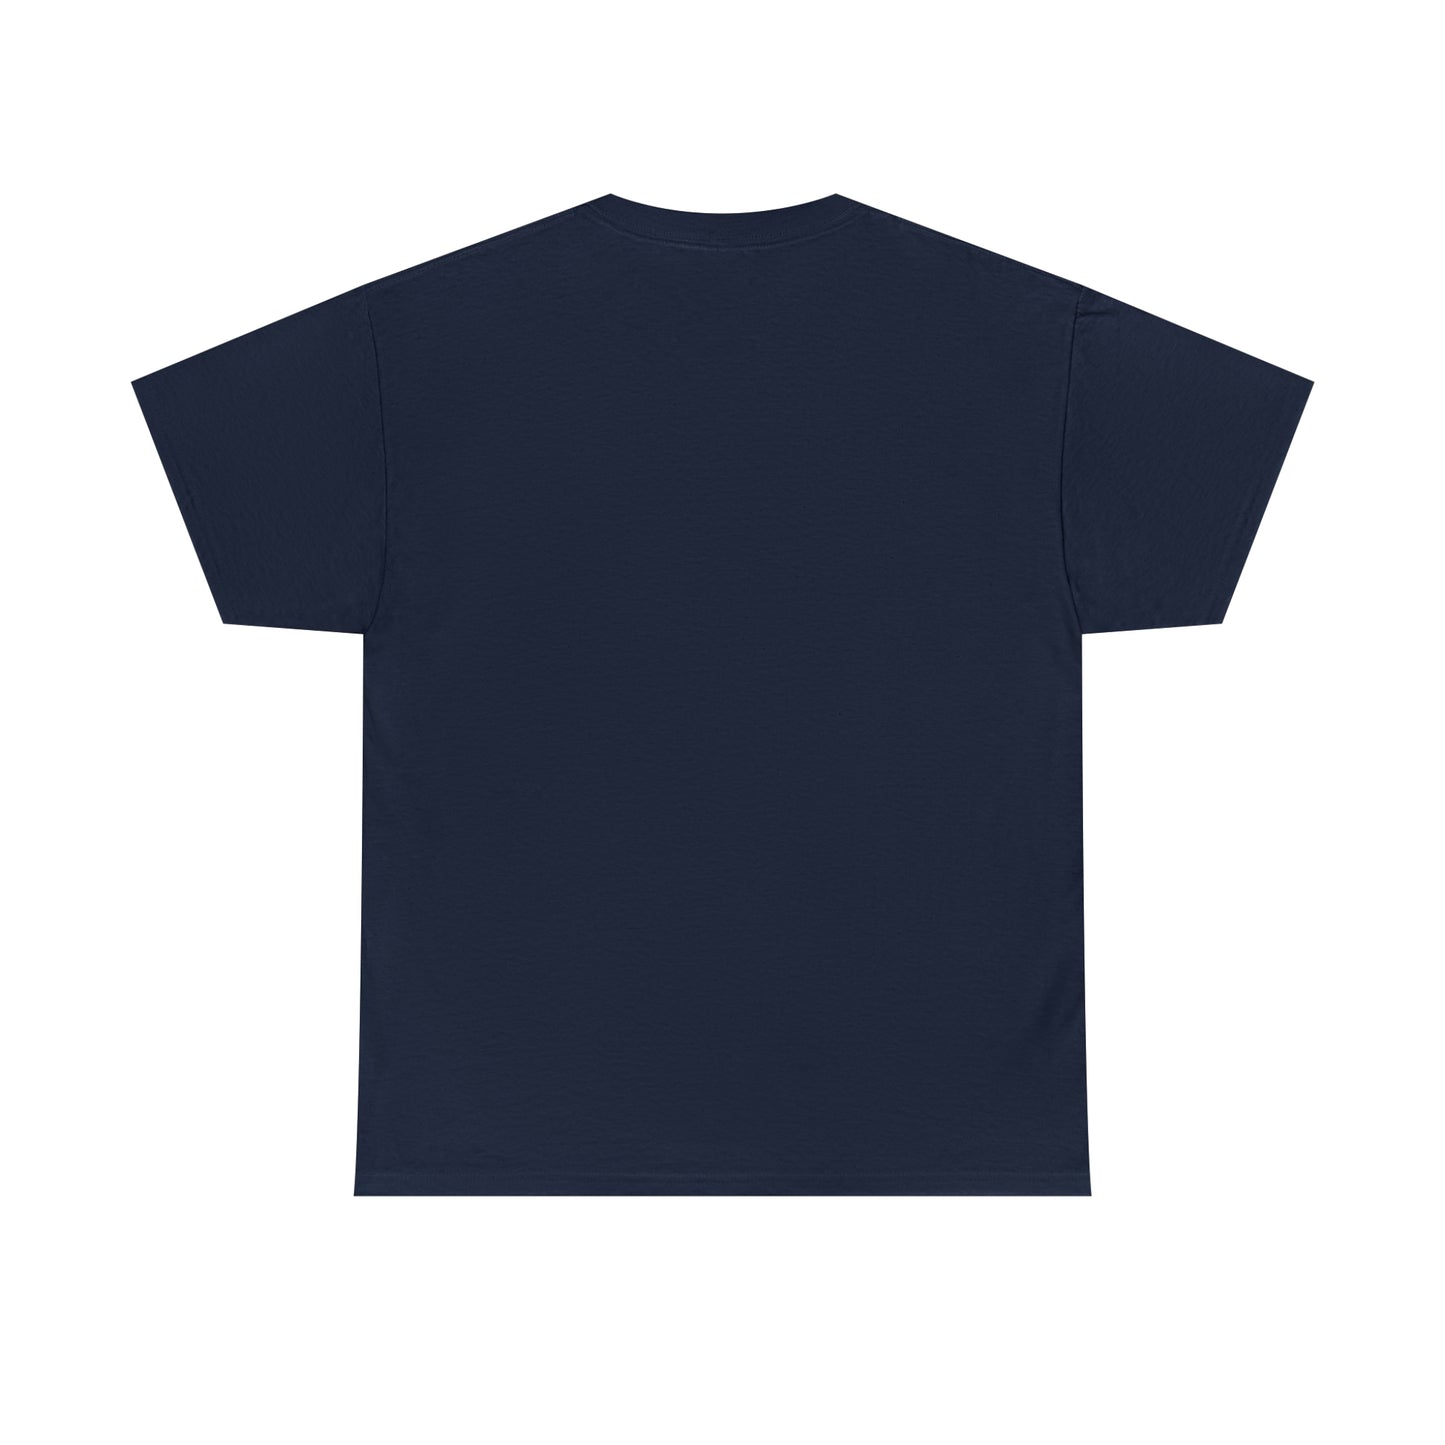 Brazilian Roots Design 5: Unisex T-Shirt